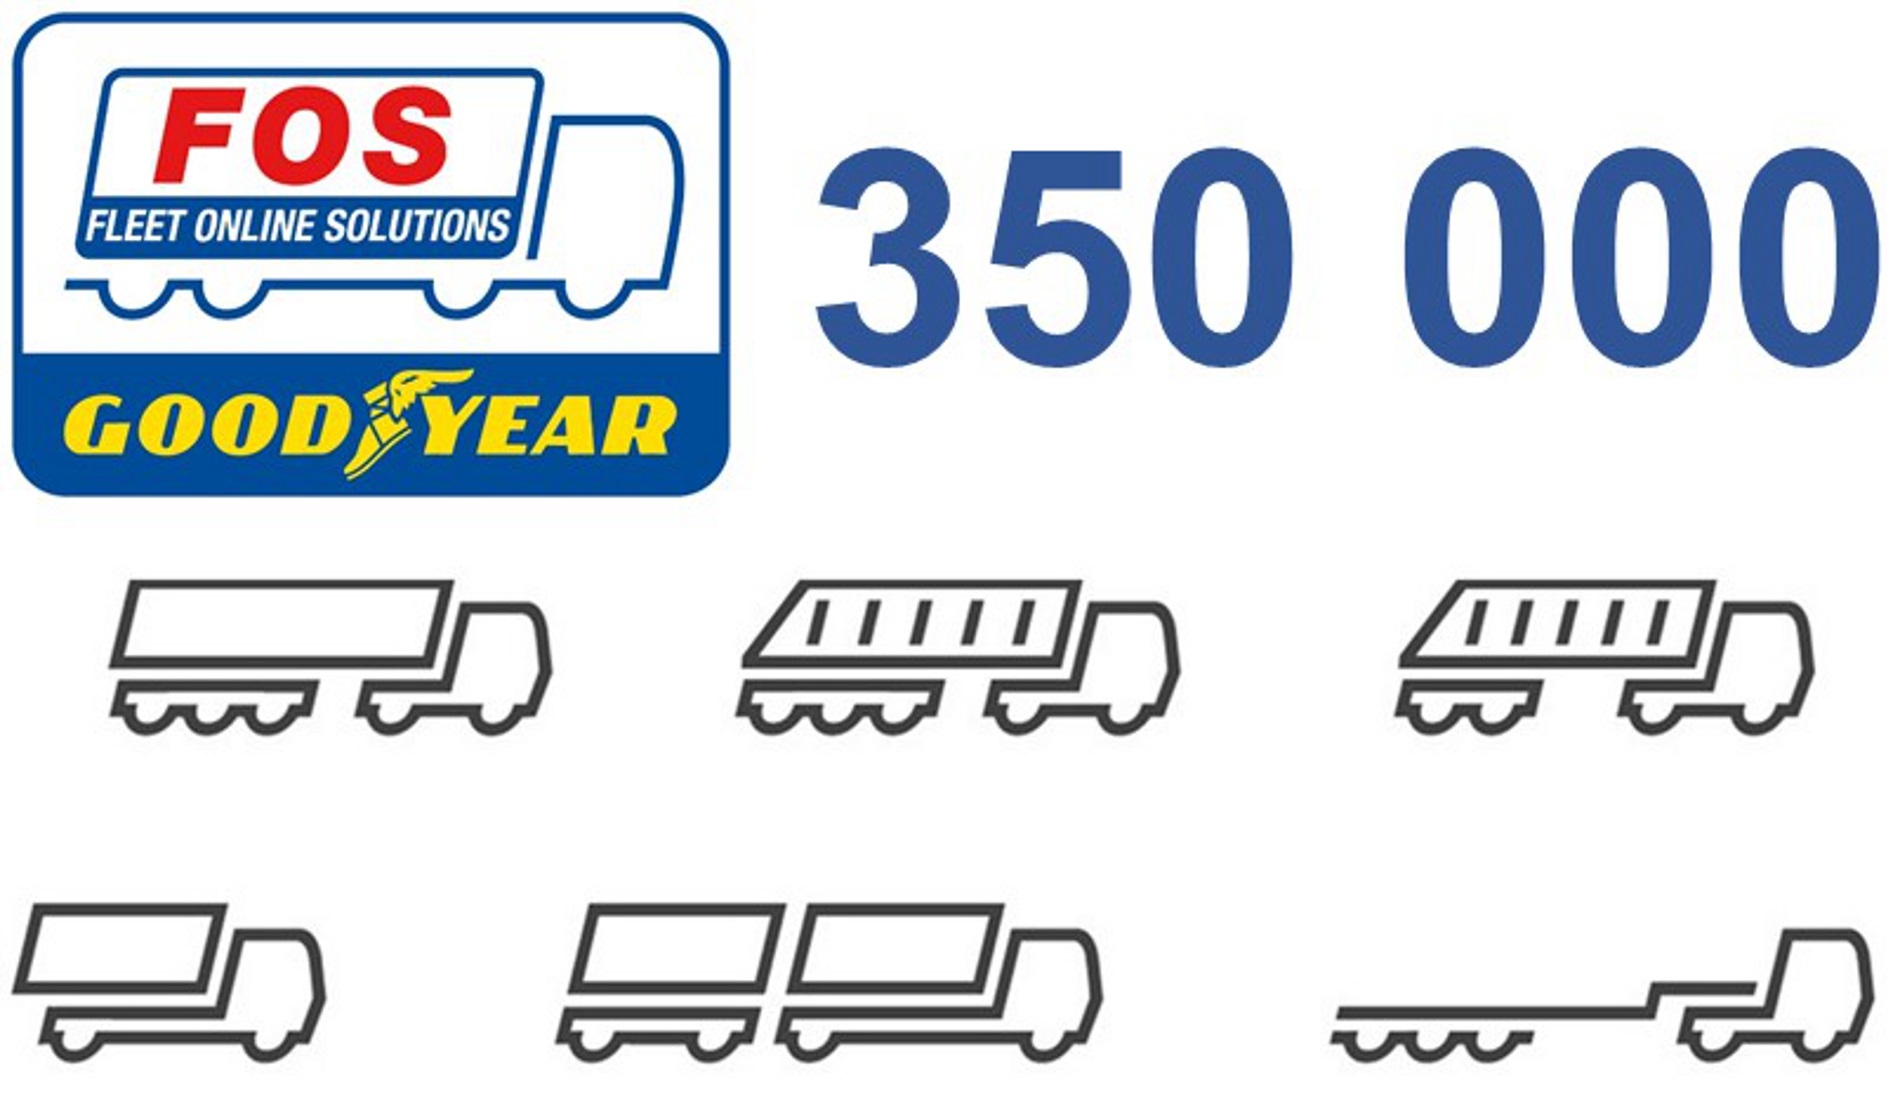 Goodyear FleetOnlineSolutions vehicle numbers head for milestone